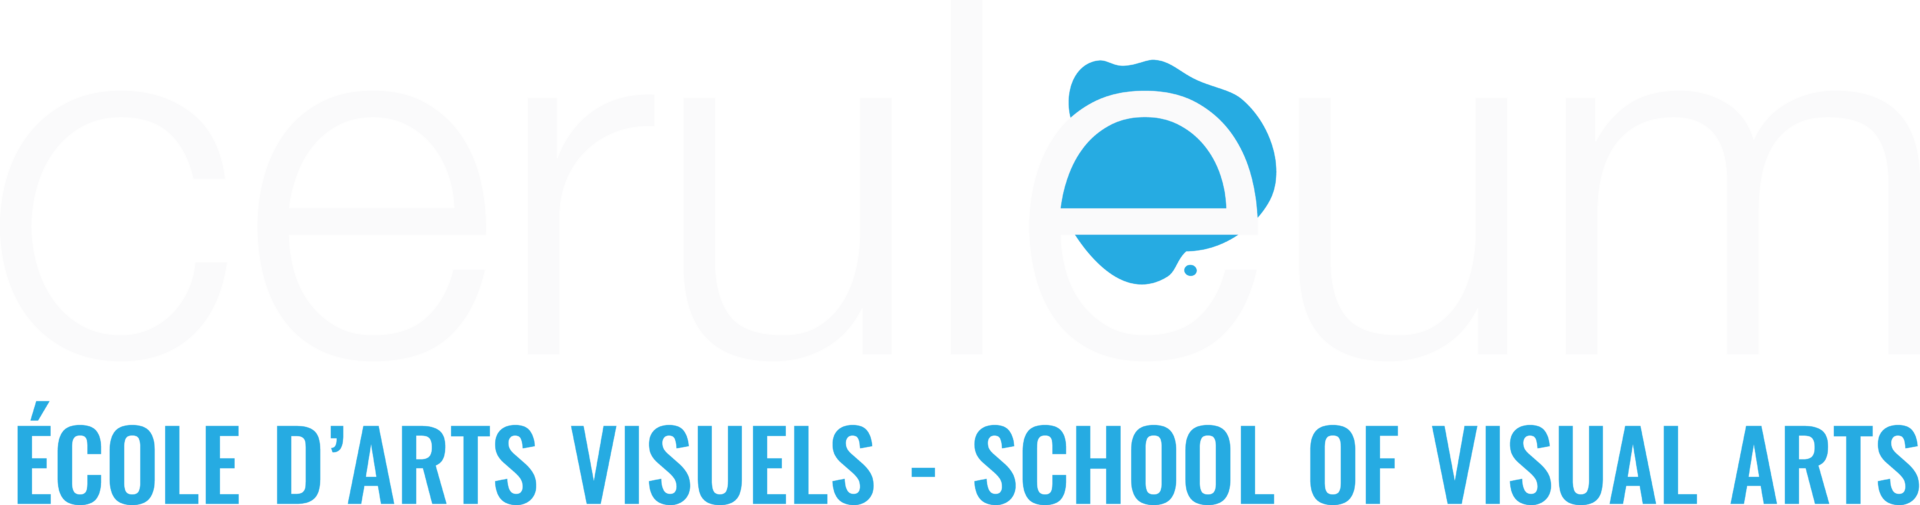 Ceruleum School of Visual Arts logo.